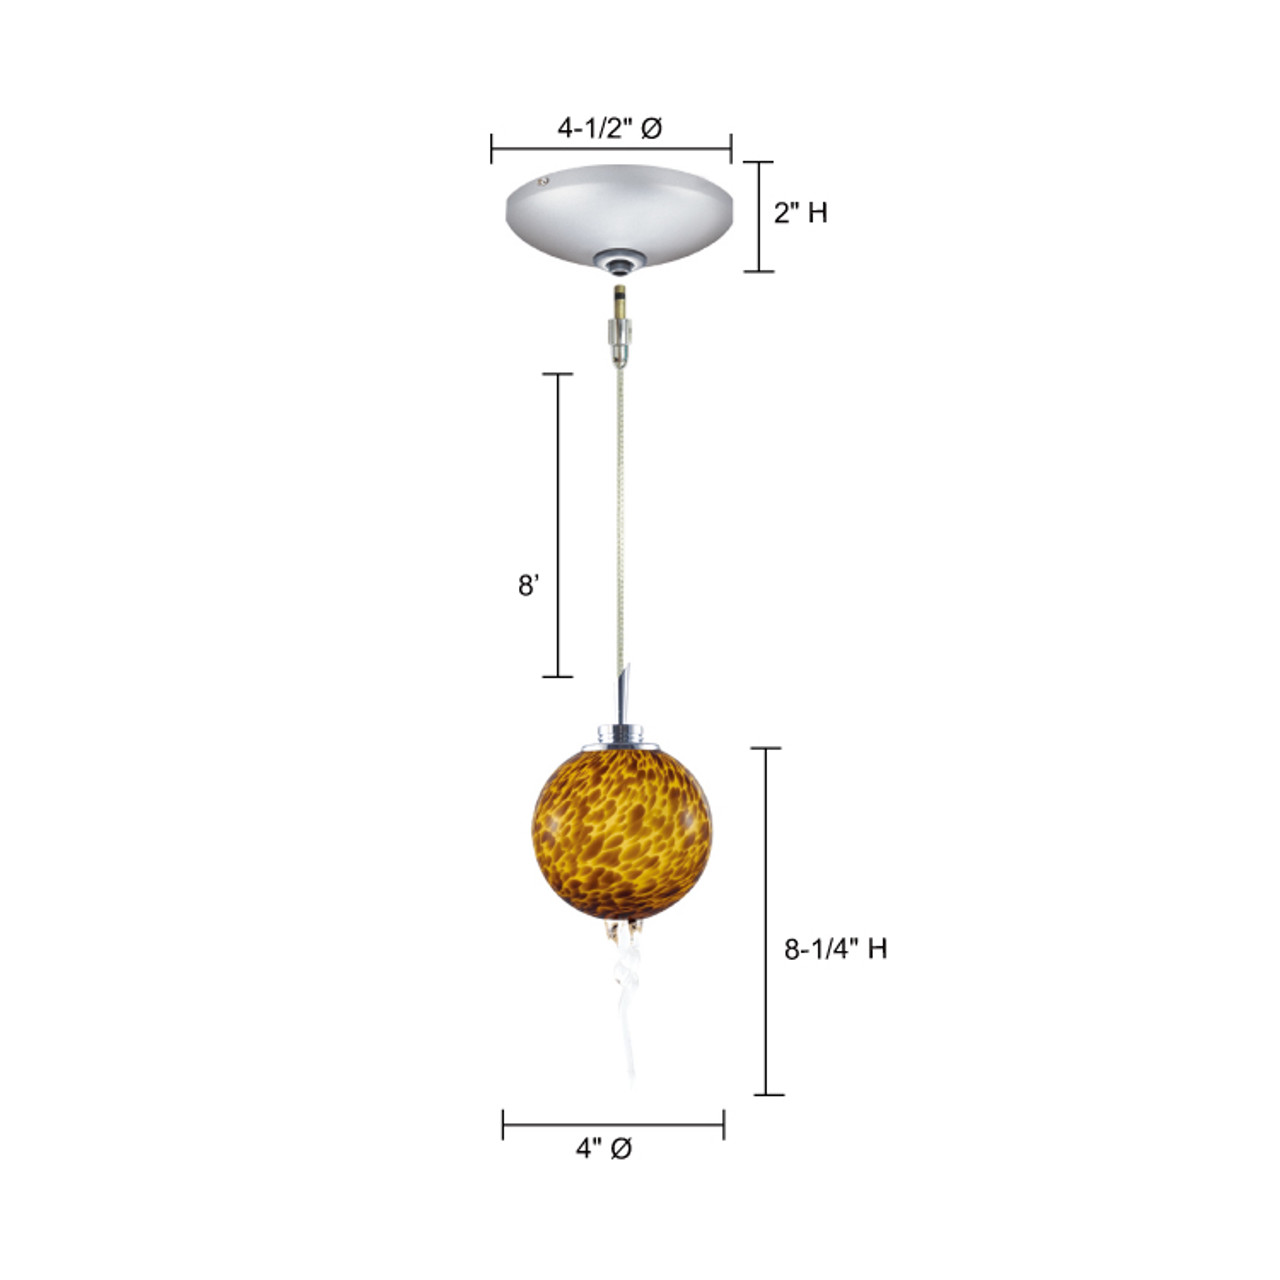 JESCO Lighting KIT-QAP221-AM-A TORI Low Voltage Pendant & Canopy Kit, Satin Nickel